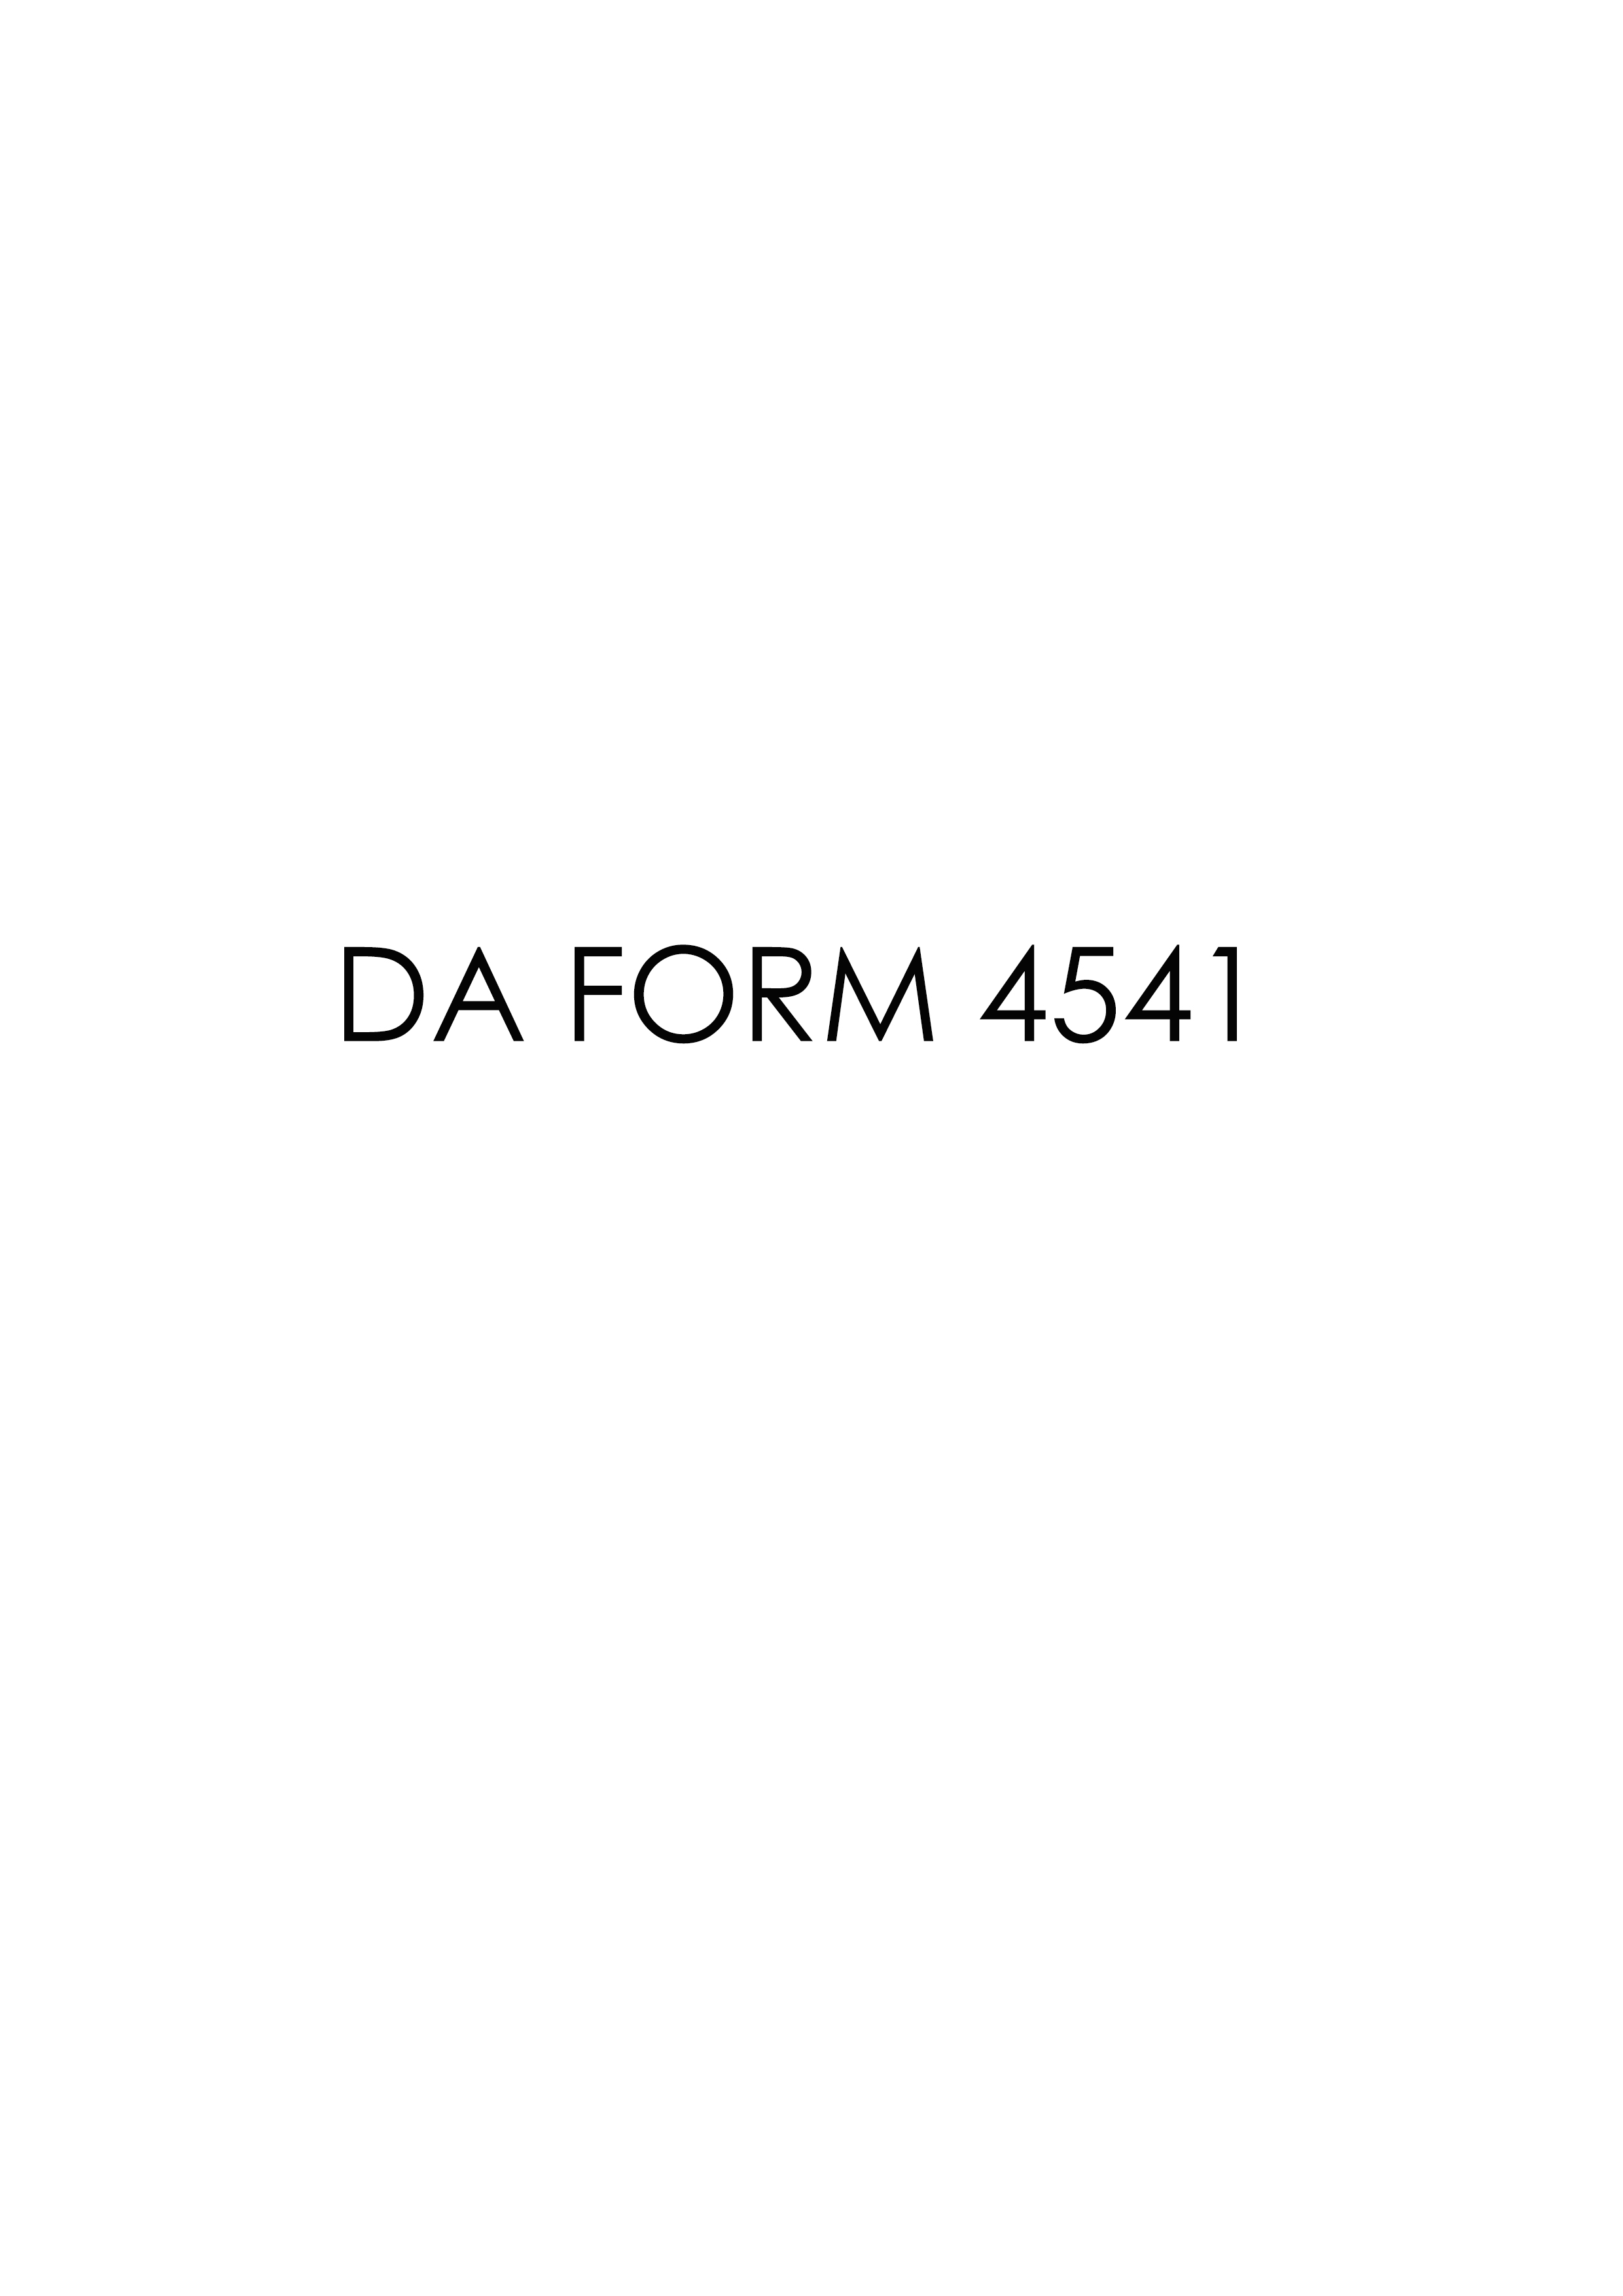 da Form 4541 fillable